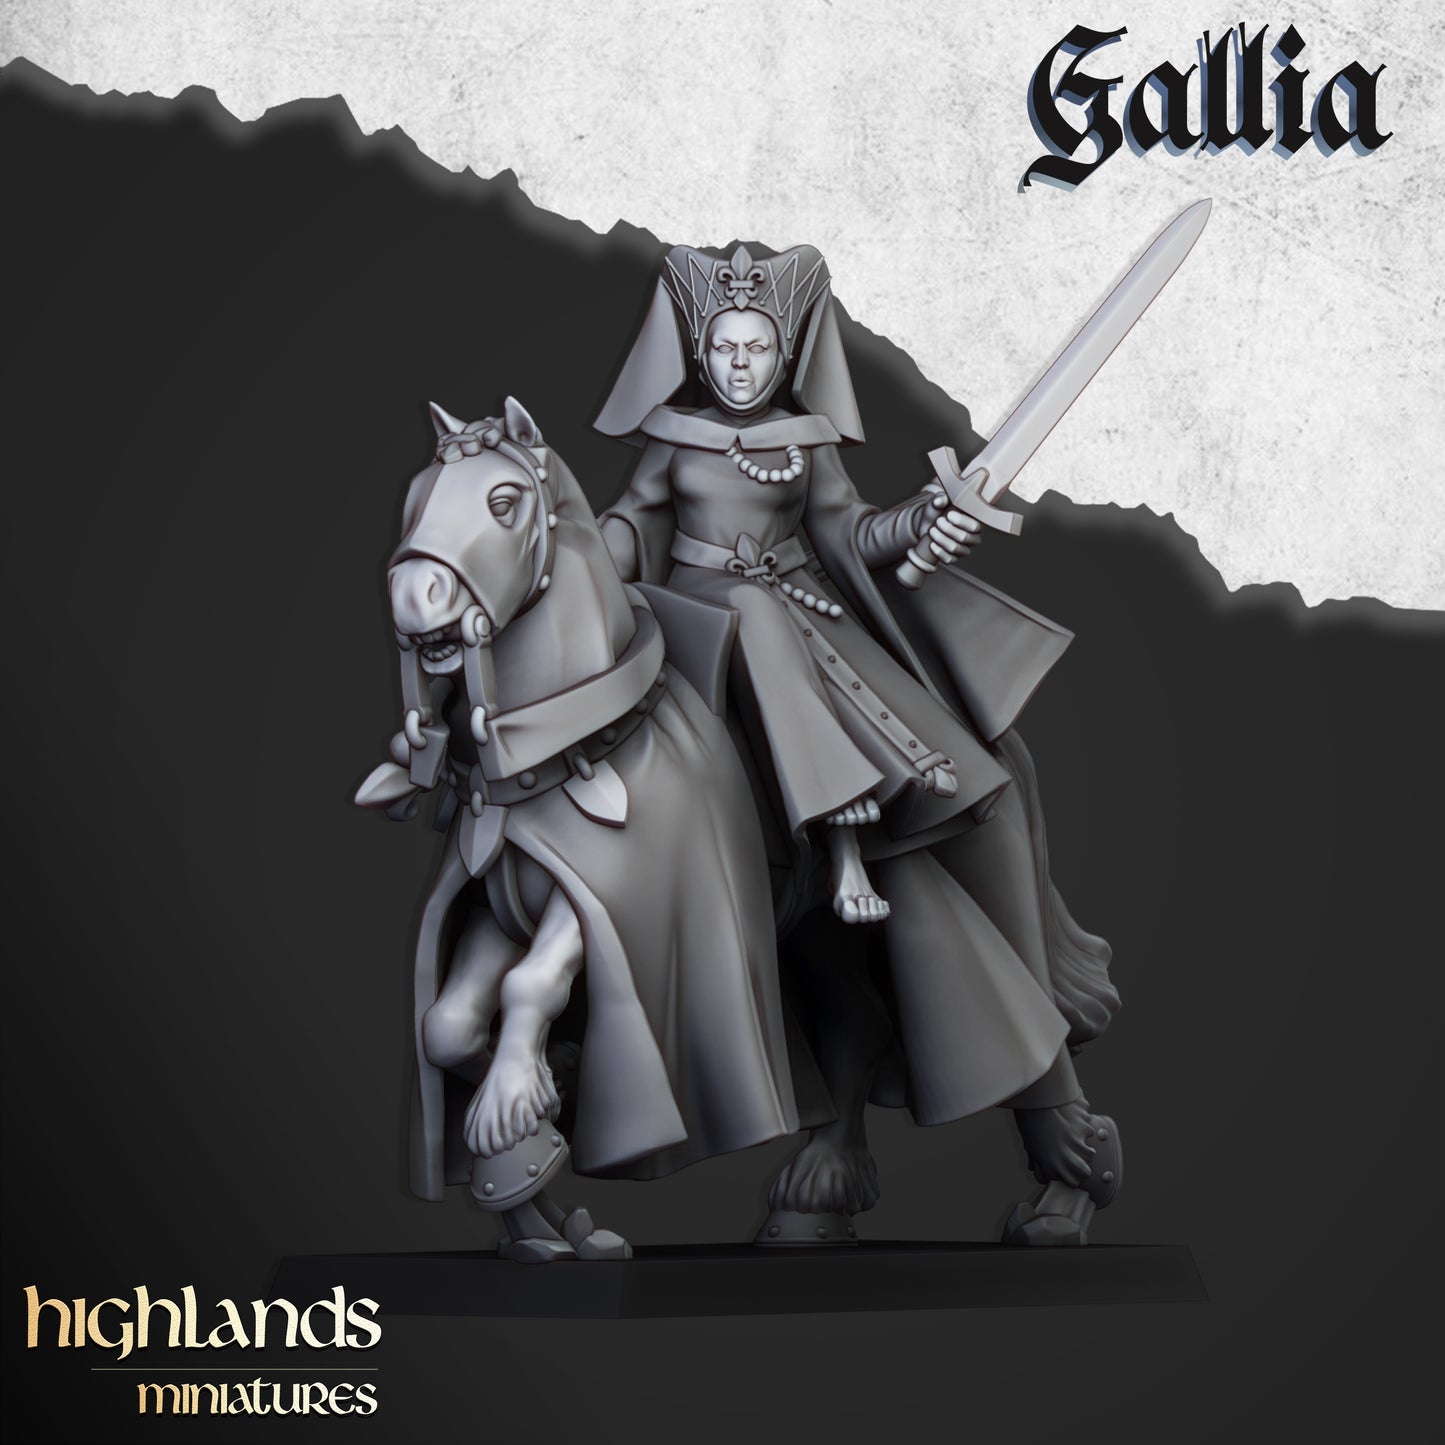 Gallia Damsel from Highlands Miniatures